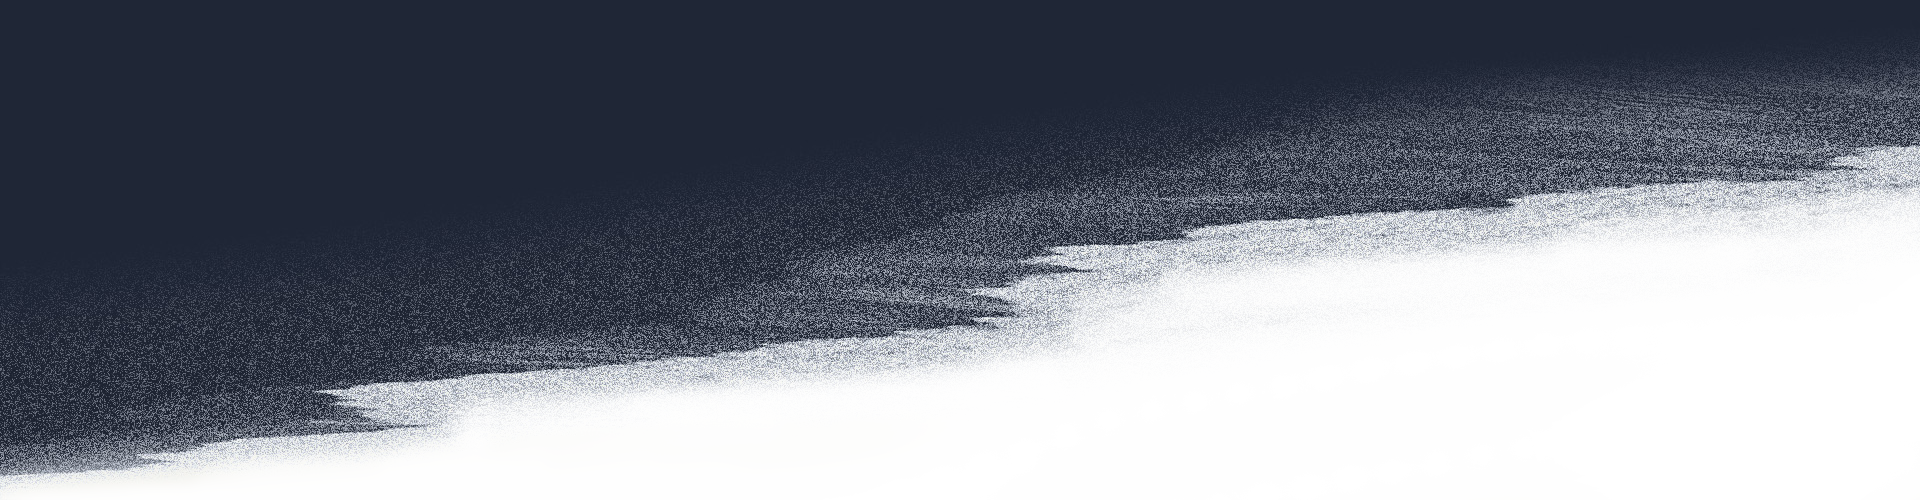 wave-image